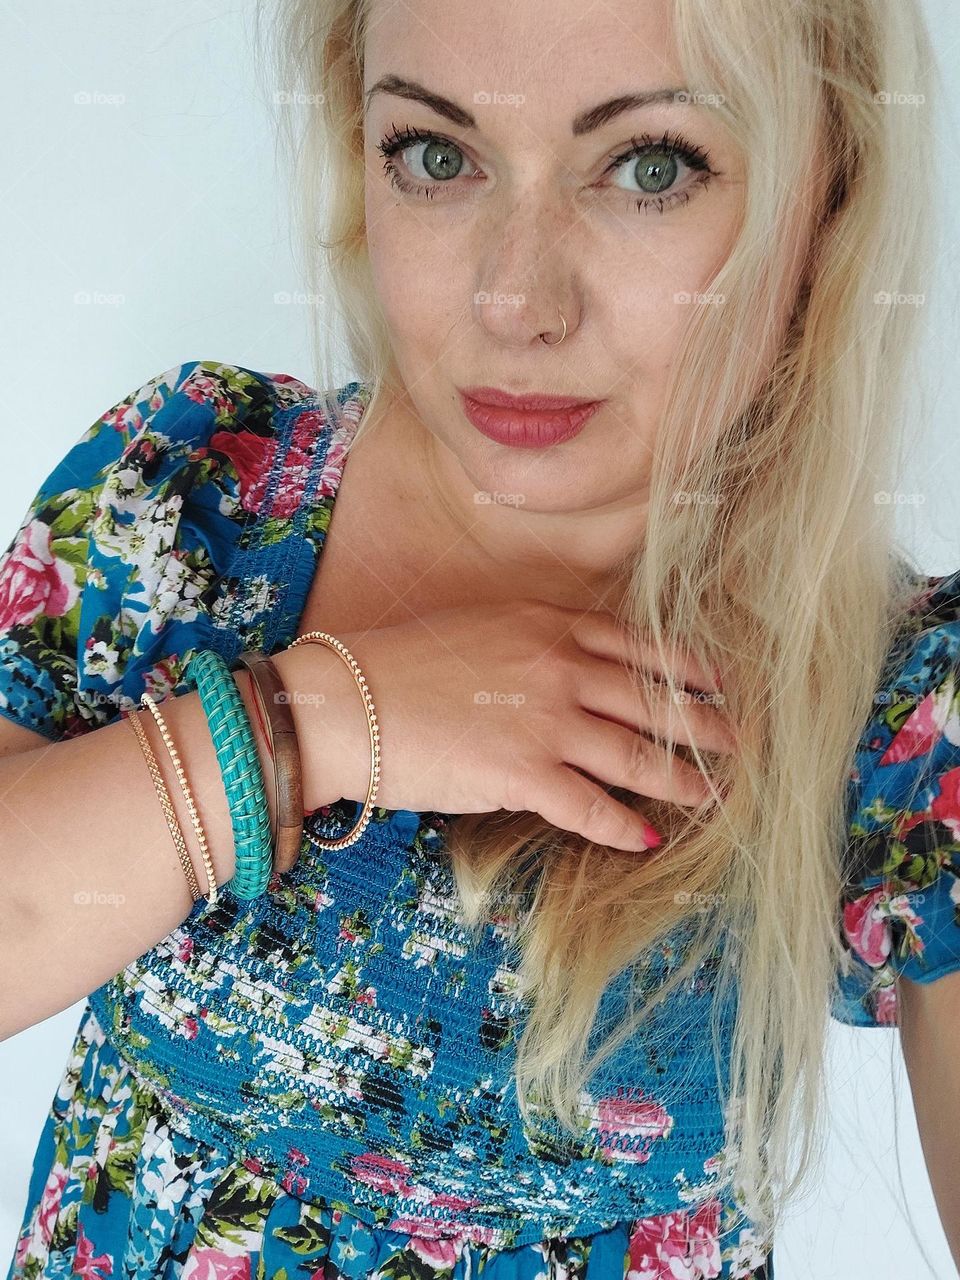 blonde woman with bracelets